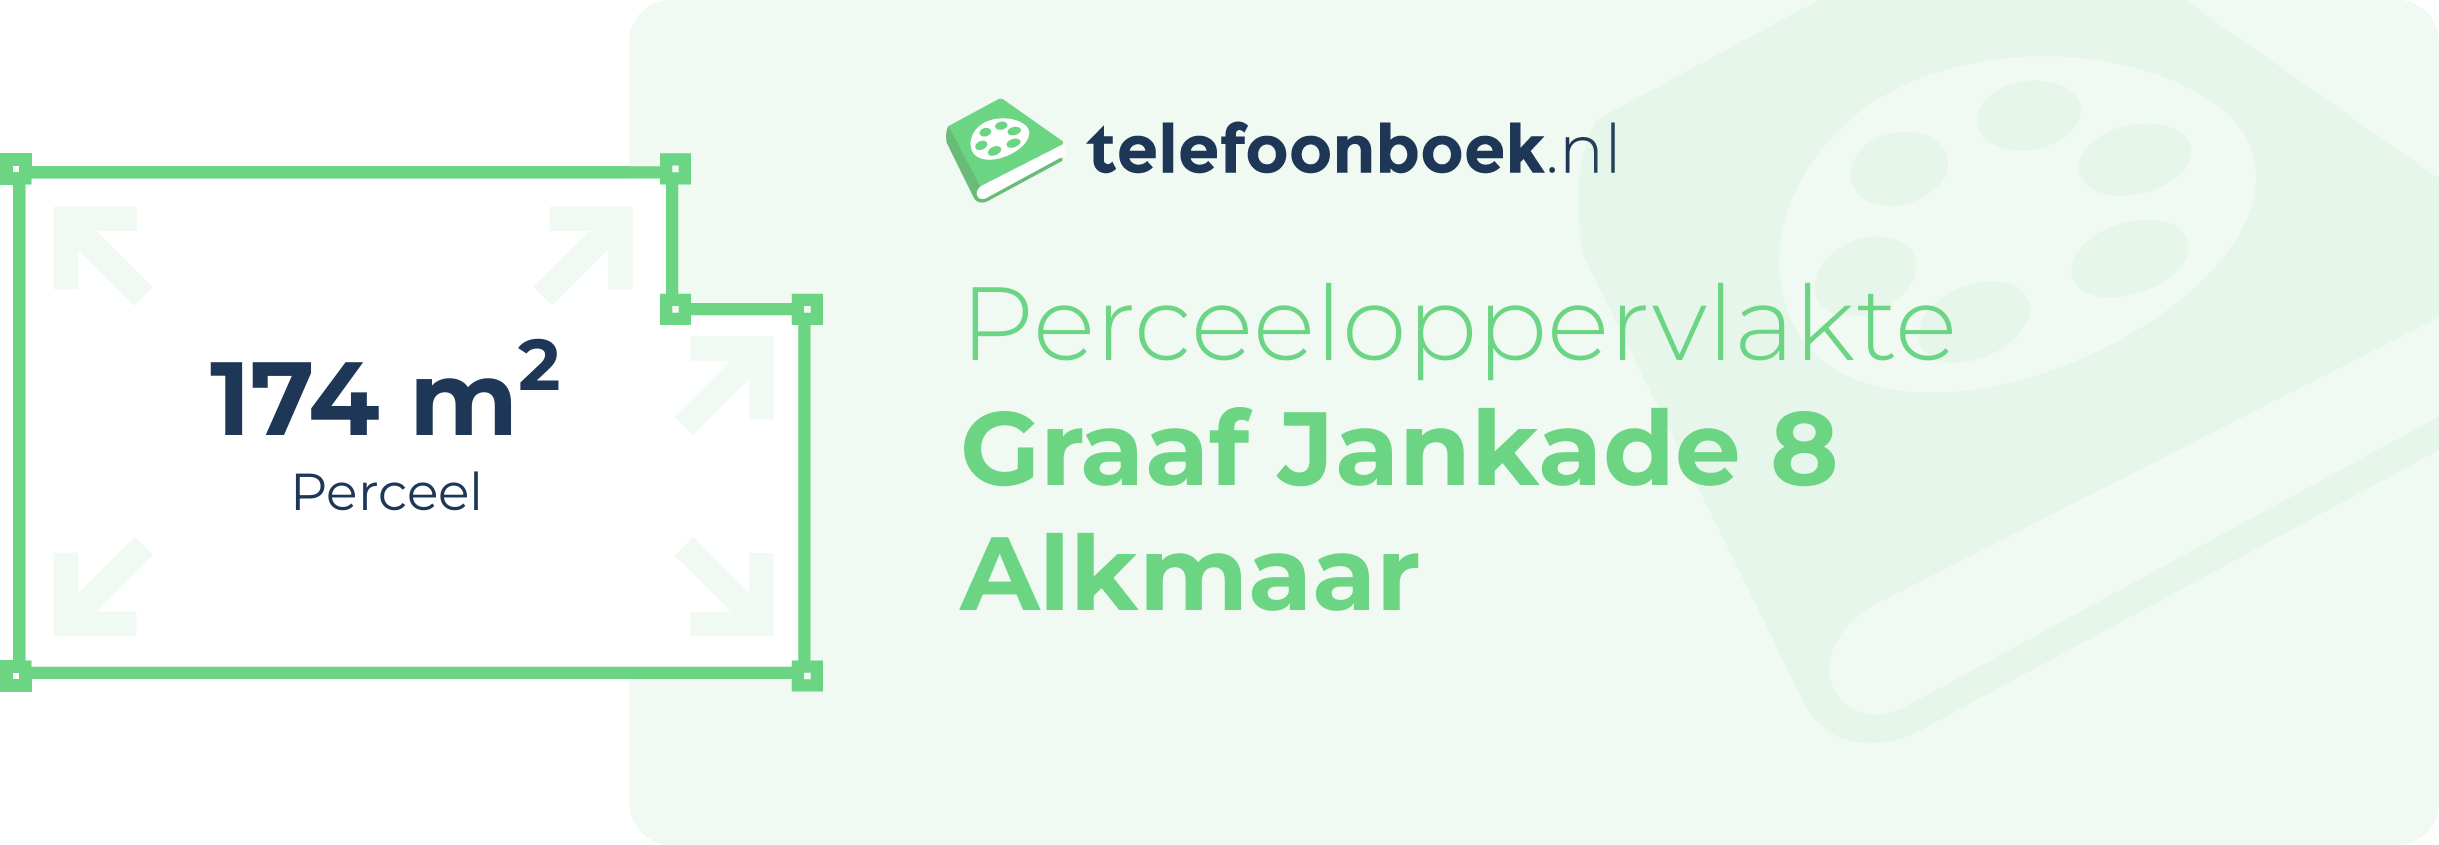 Perceeloppervlakte Graaf Jankade 8 Alkmaar